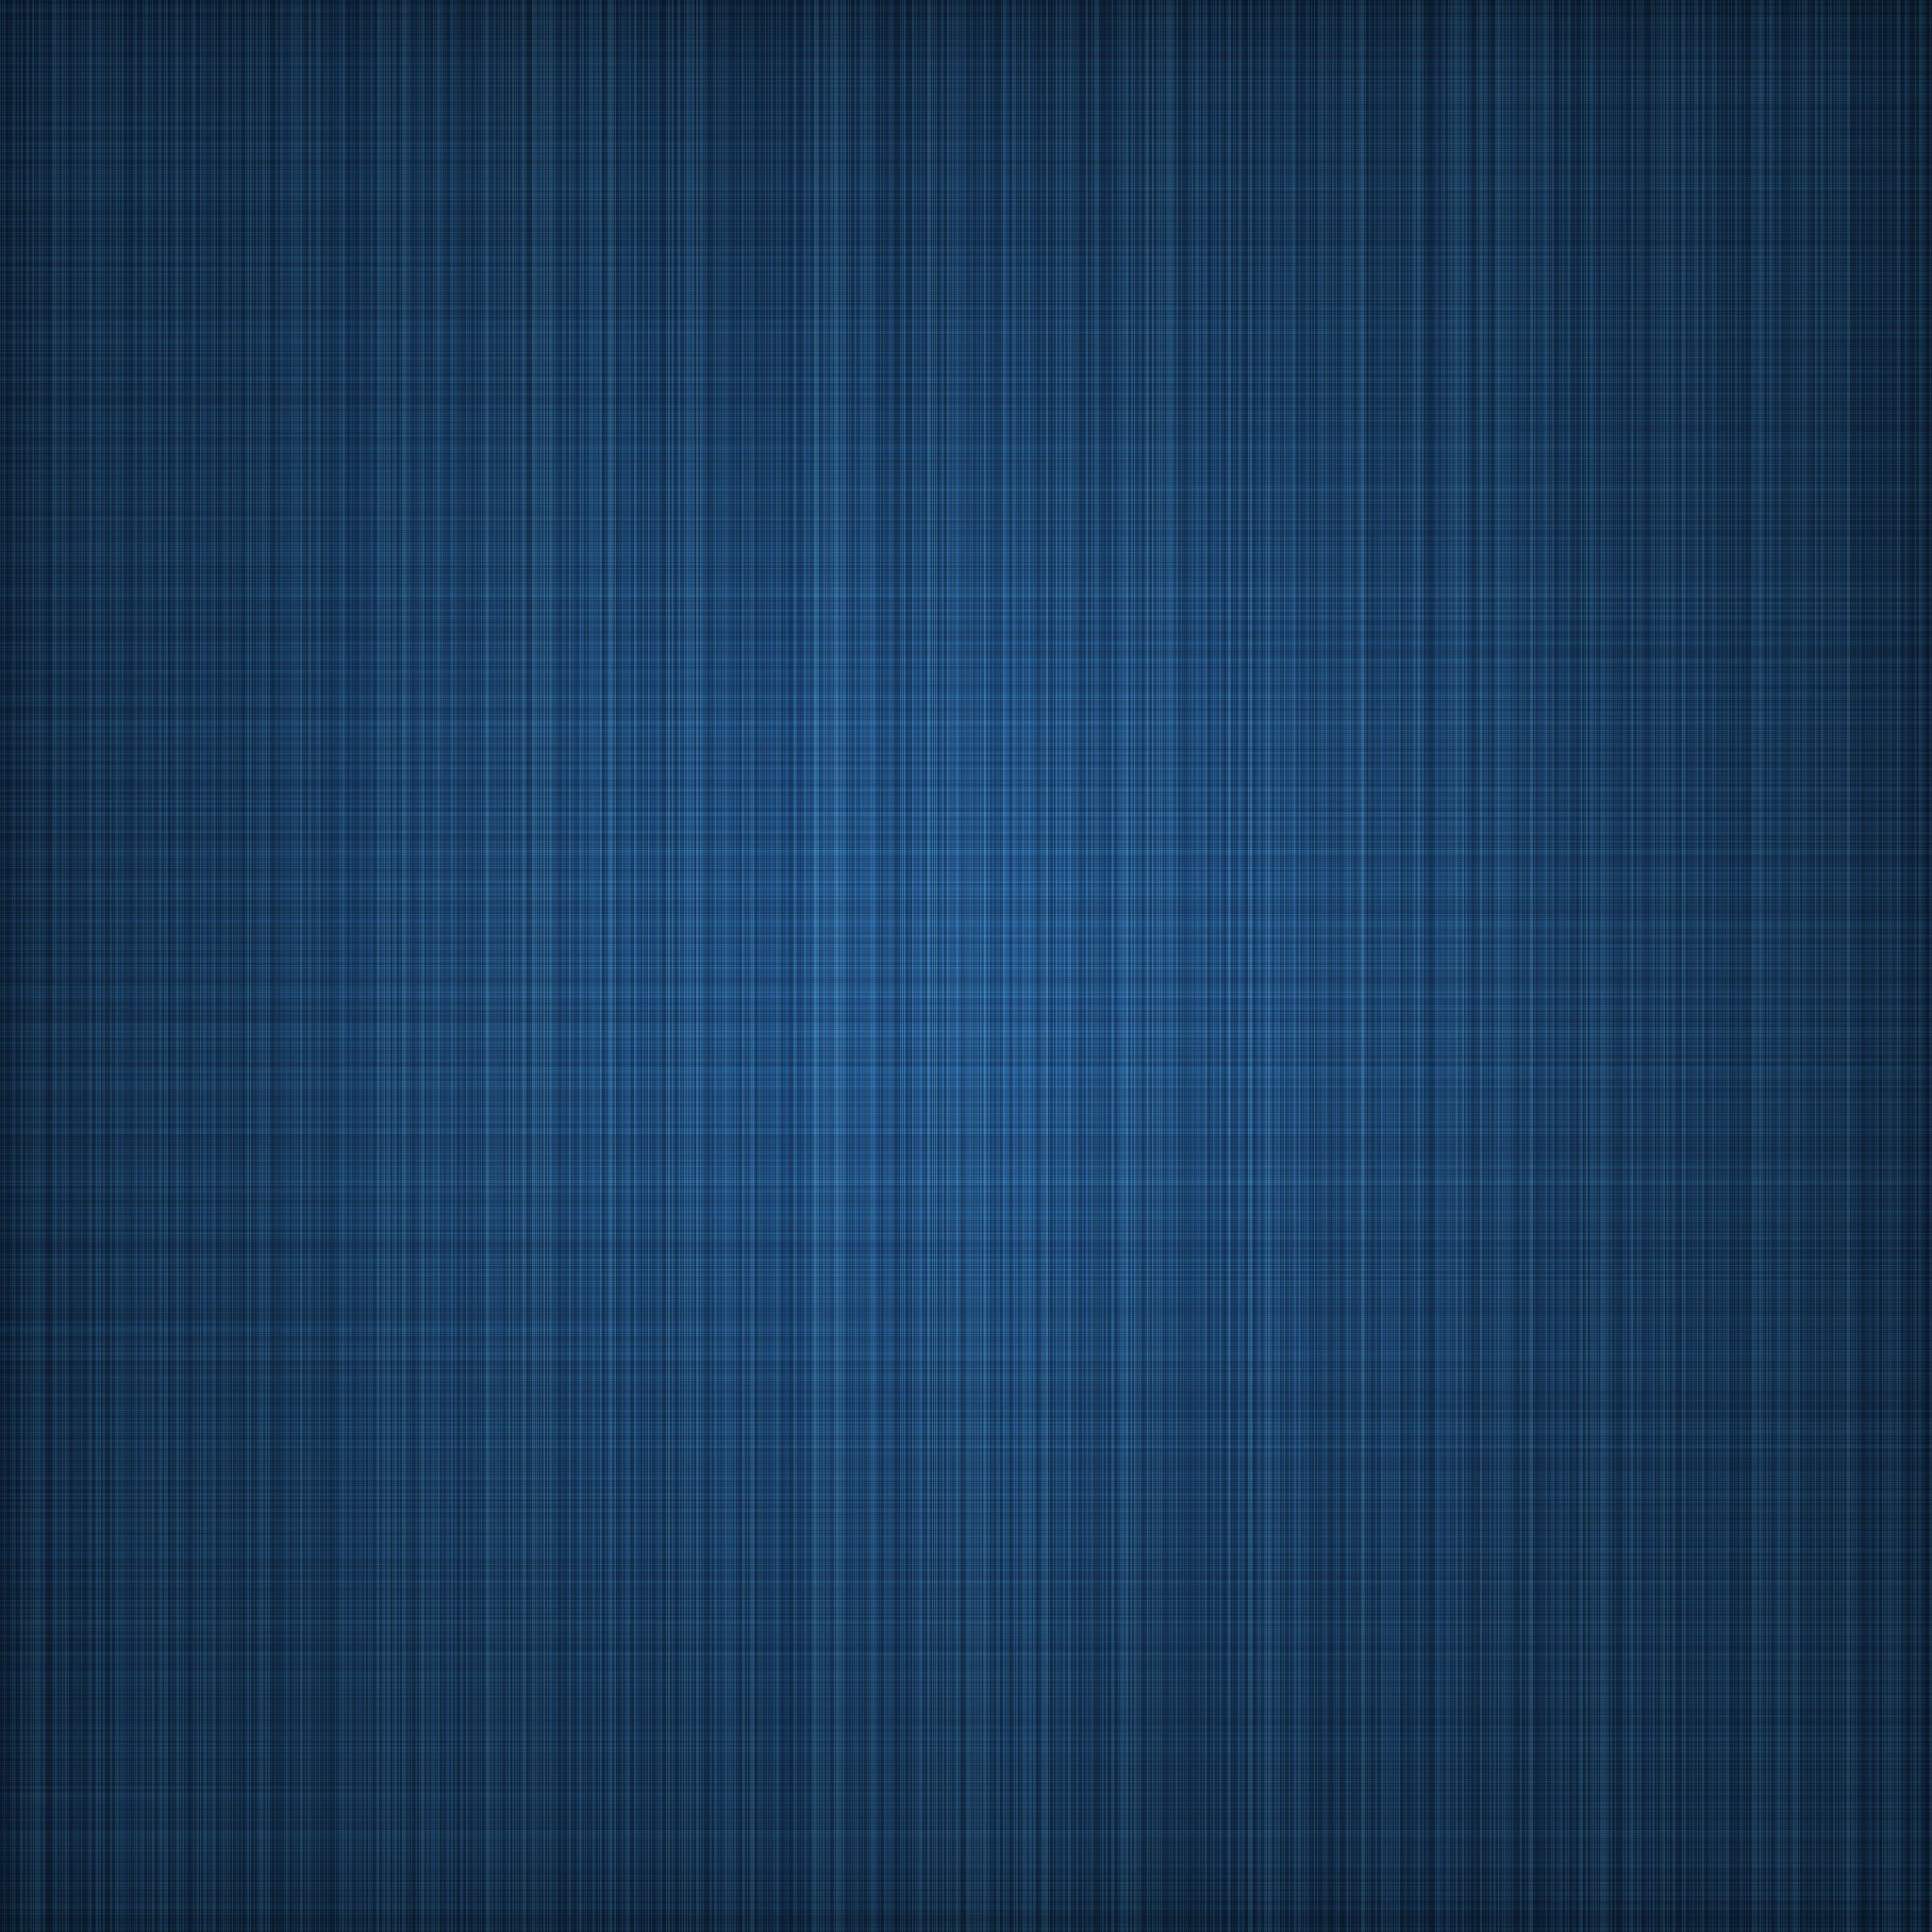 Aggregate 74+ ipad wallpaper blue latest - in.cdgdbentre